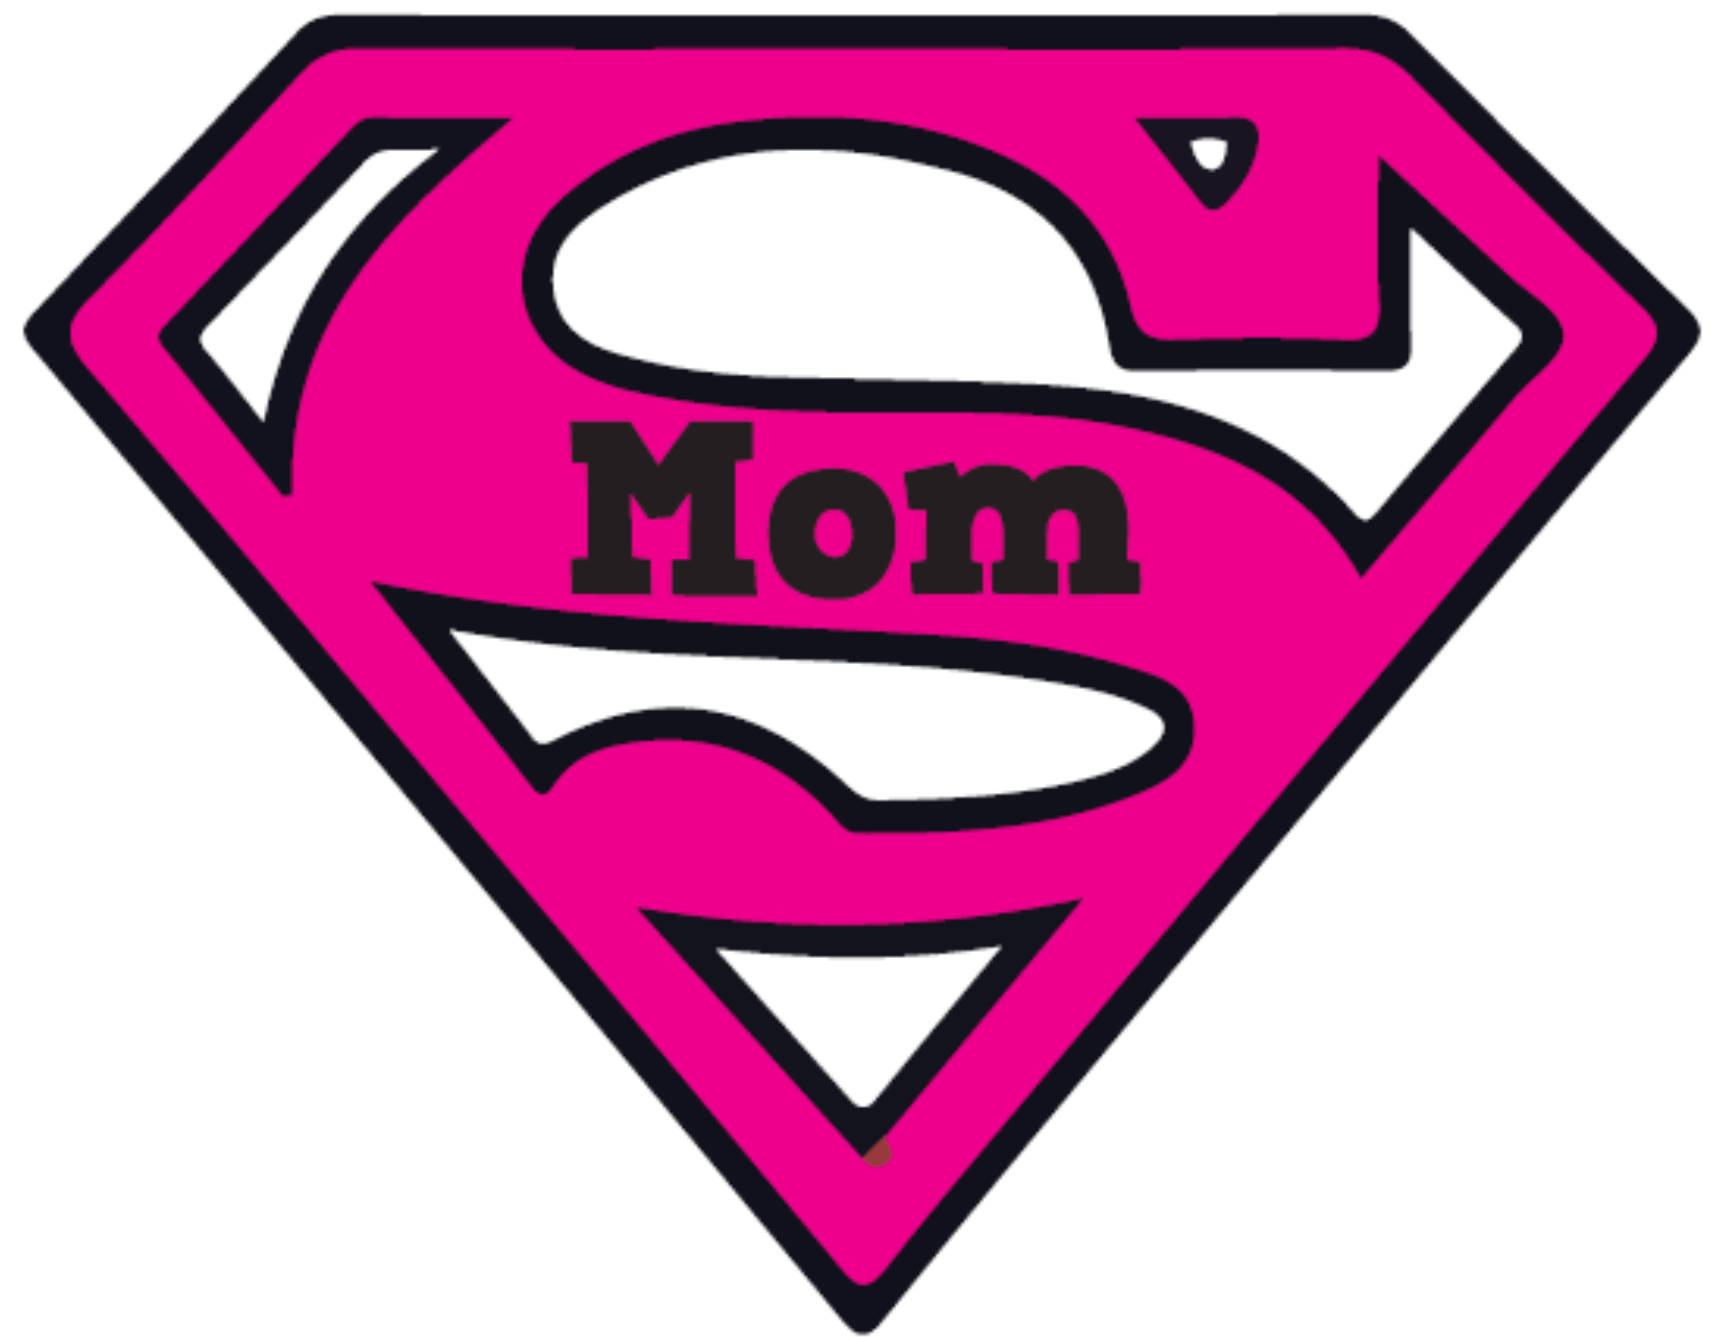 Mom Logo - Cycleguy's Spin » Blog Archive em0828_super mom logo | Cycleguy's Spin